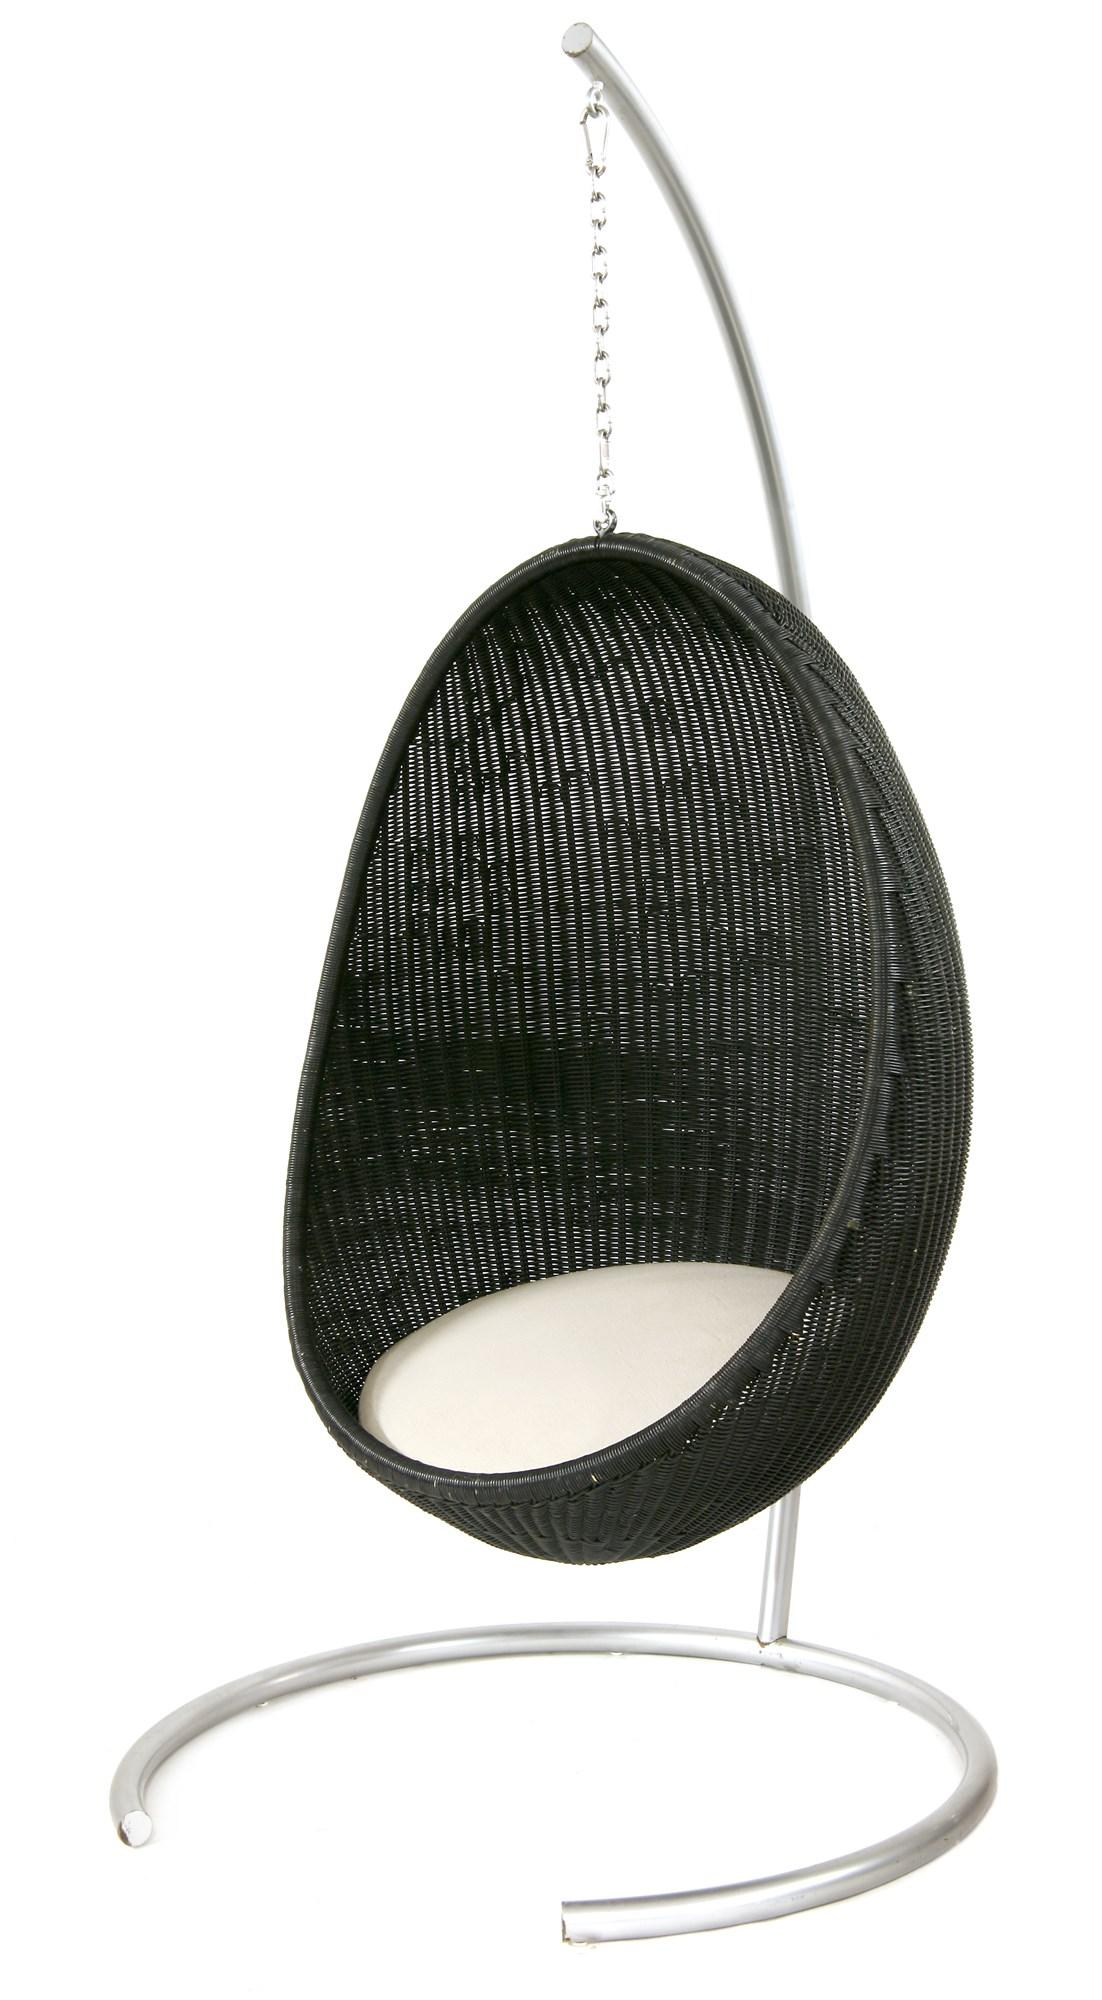  Nanna & Jorgen Ditzel design hanging egg chair, high quality, elegant and timeless design.